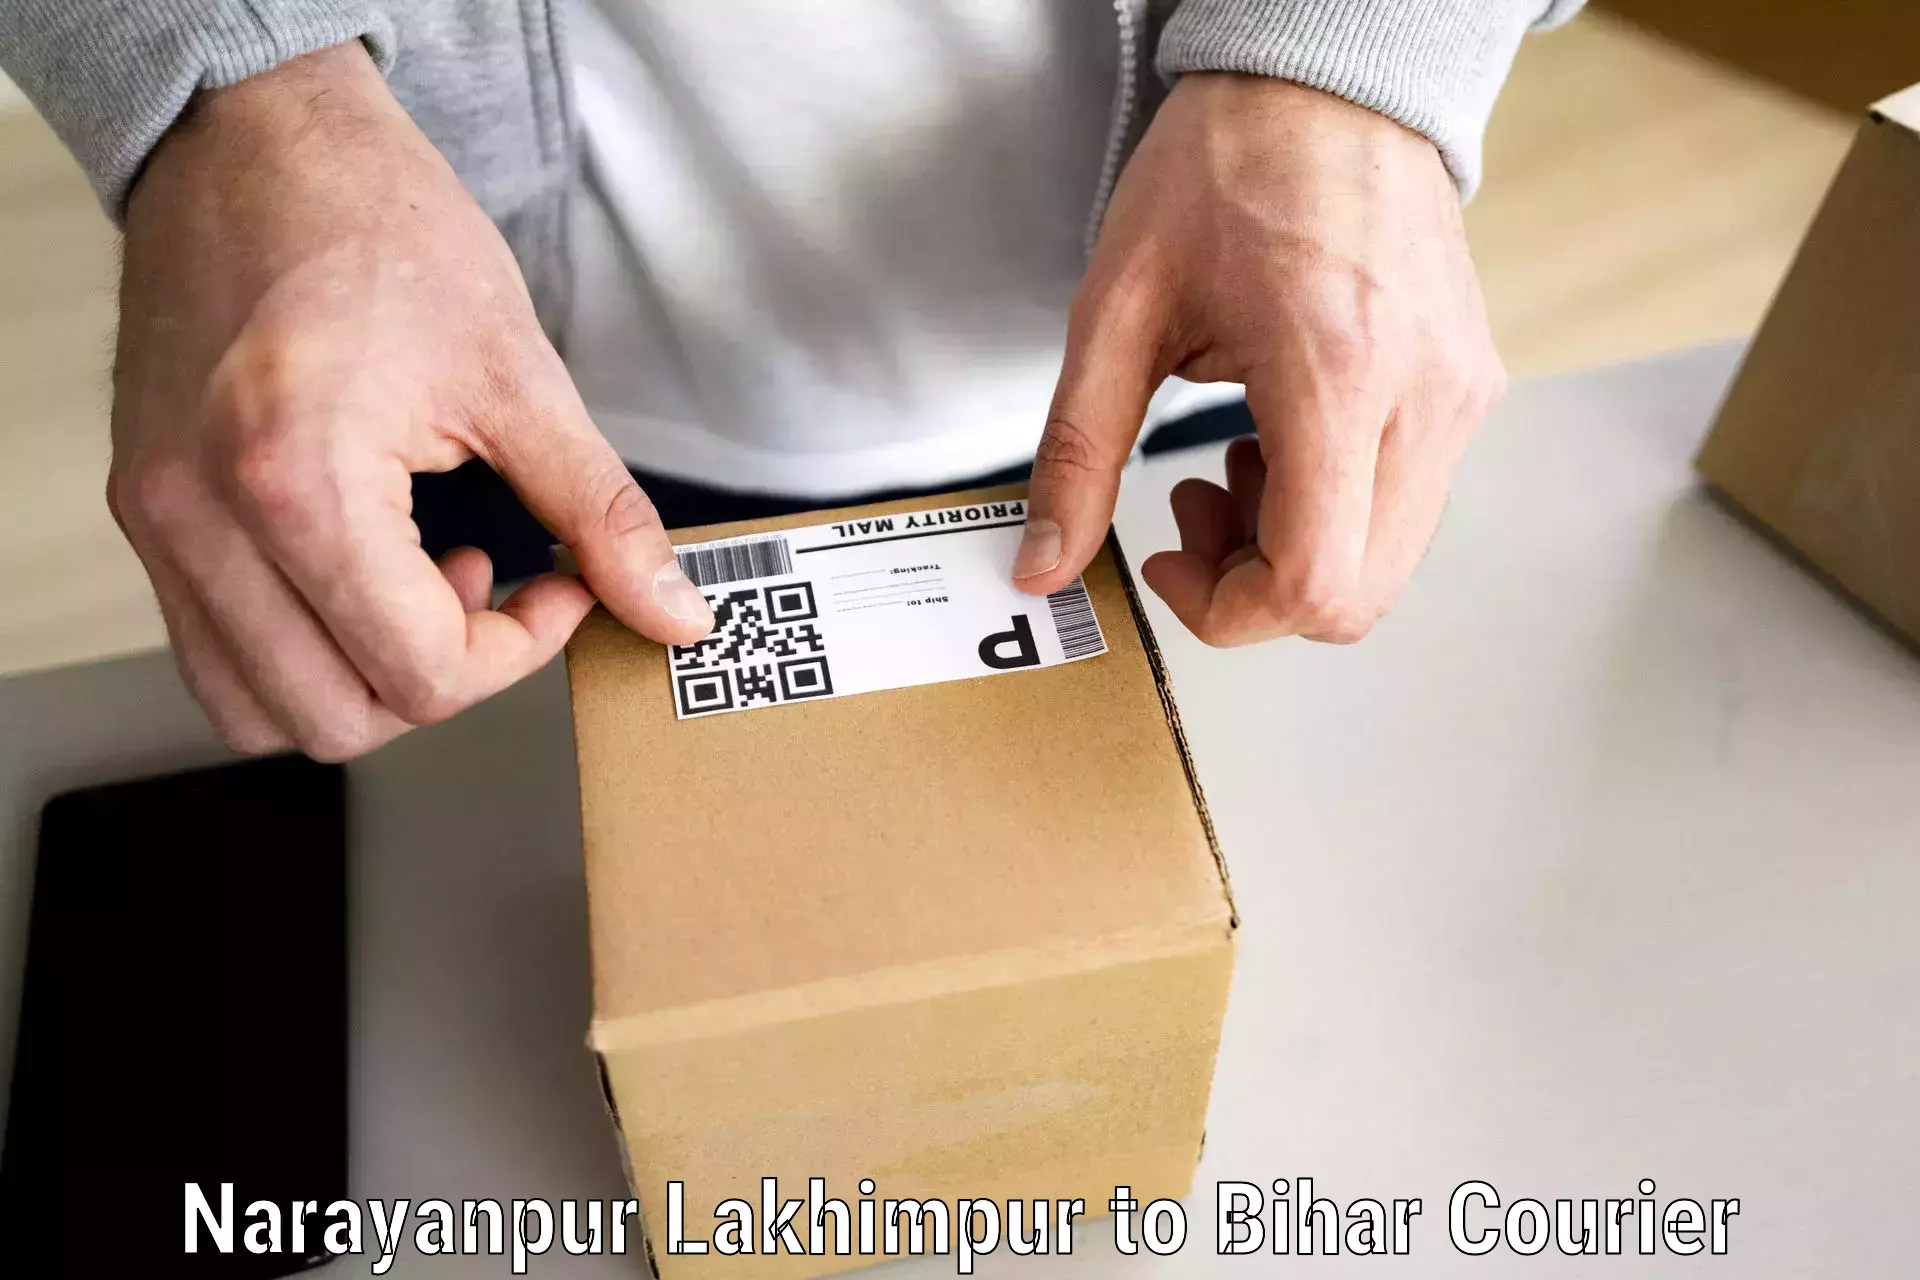 Moving and packing experts Narayanpur Lakhimpur to Sultanganj